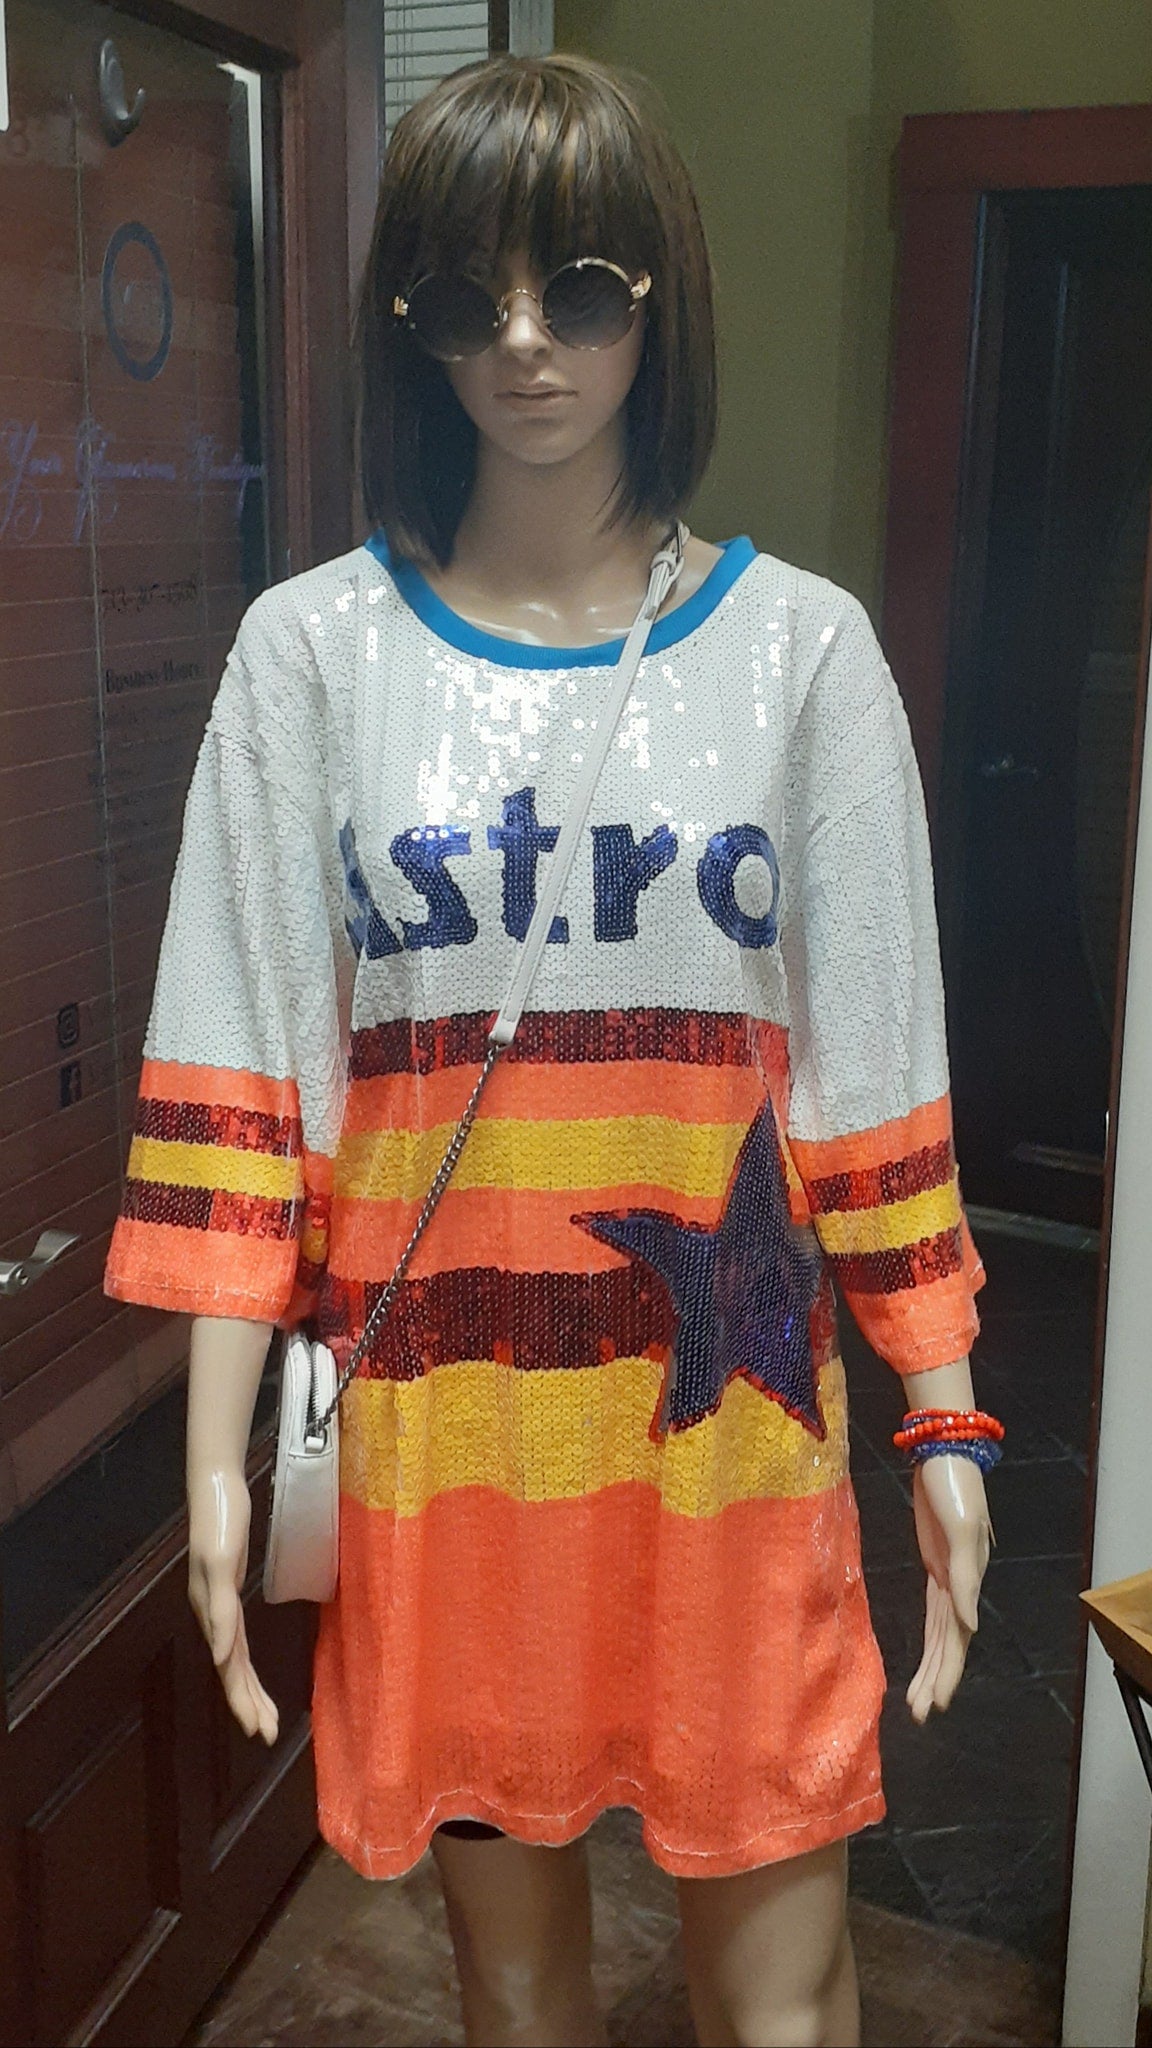 Astros Dress/Shirt - Your Glamorous Boutique